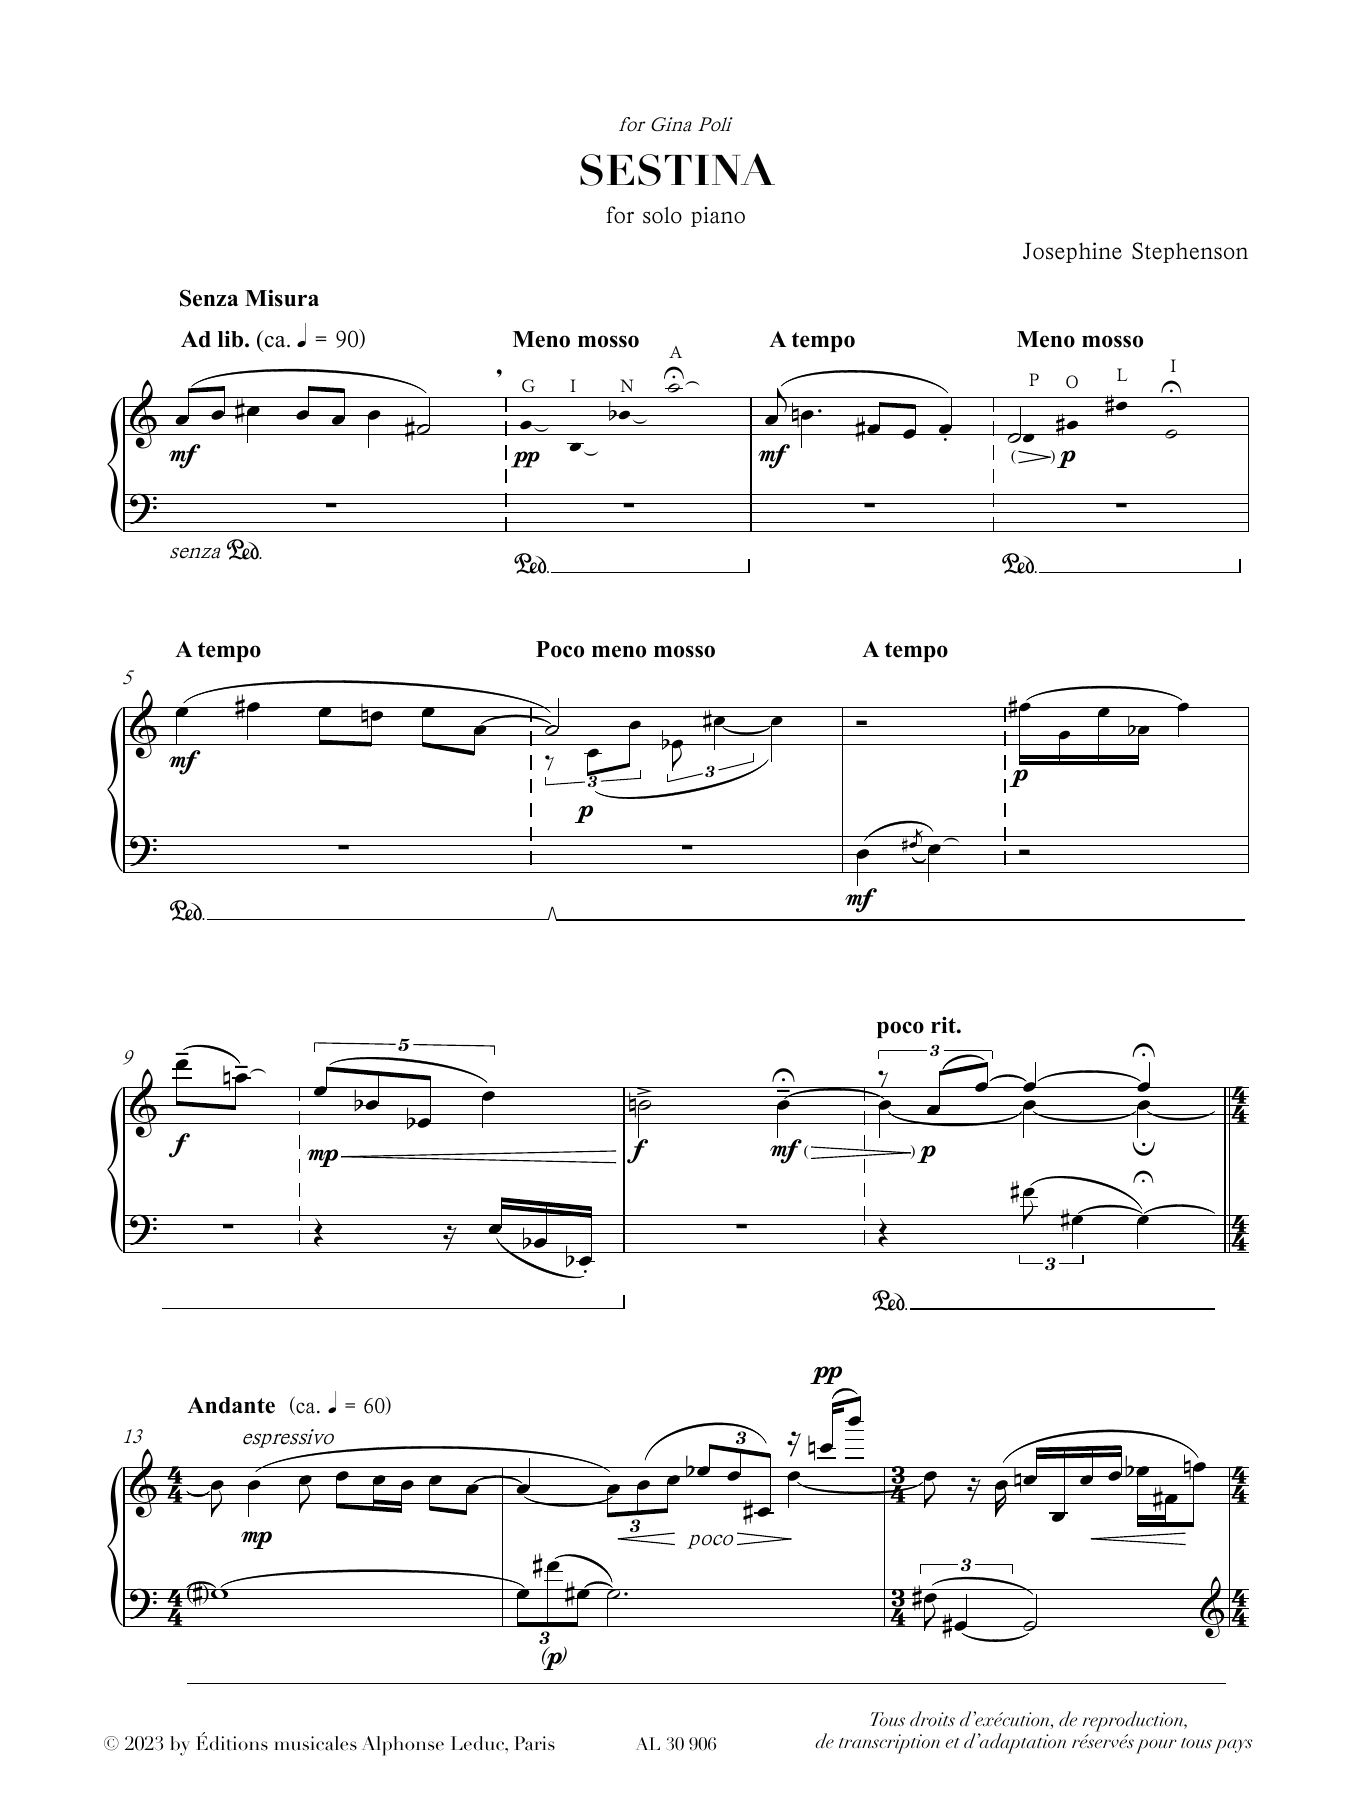 Josephine Stephenson Sestina sheet music notes printable PDF score